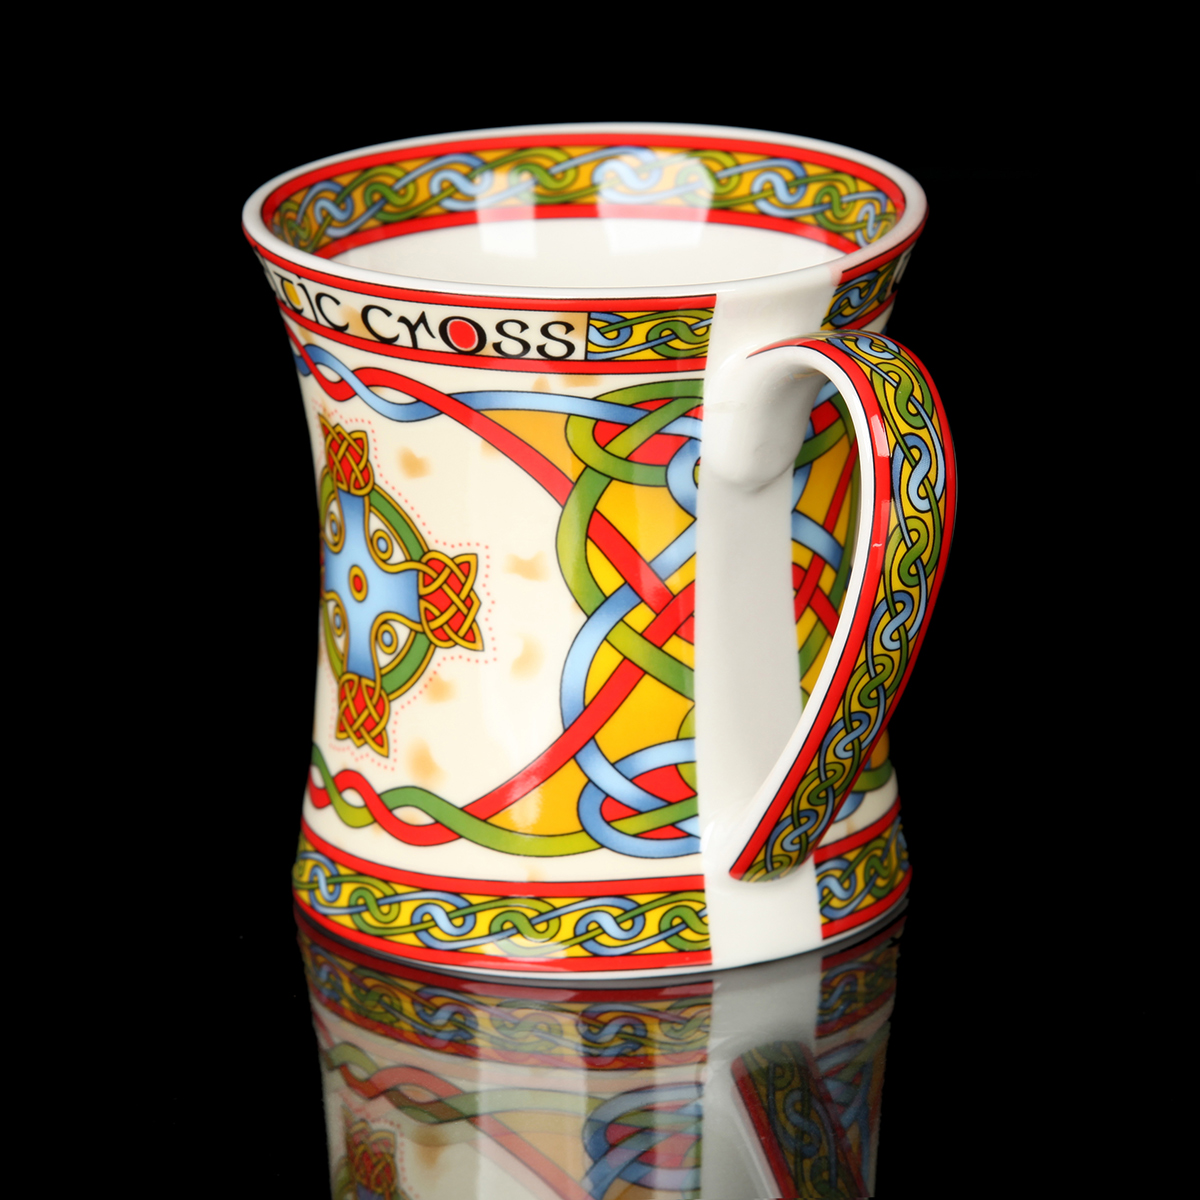 Celtic Cross Mug - Kaffeebecher aus Irland mit keltischem Kreuz & Ornamenten